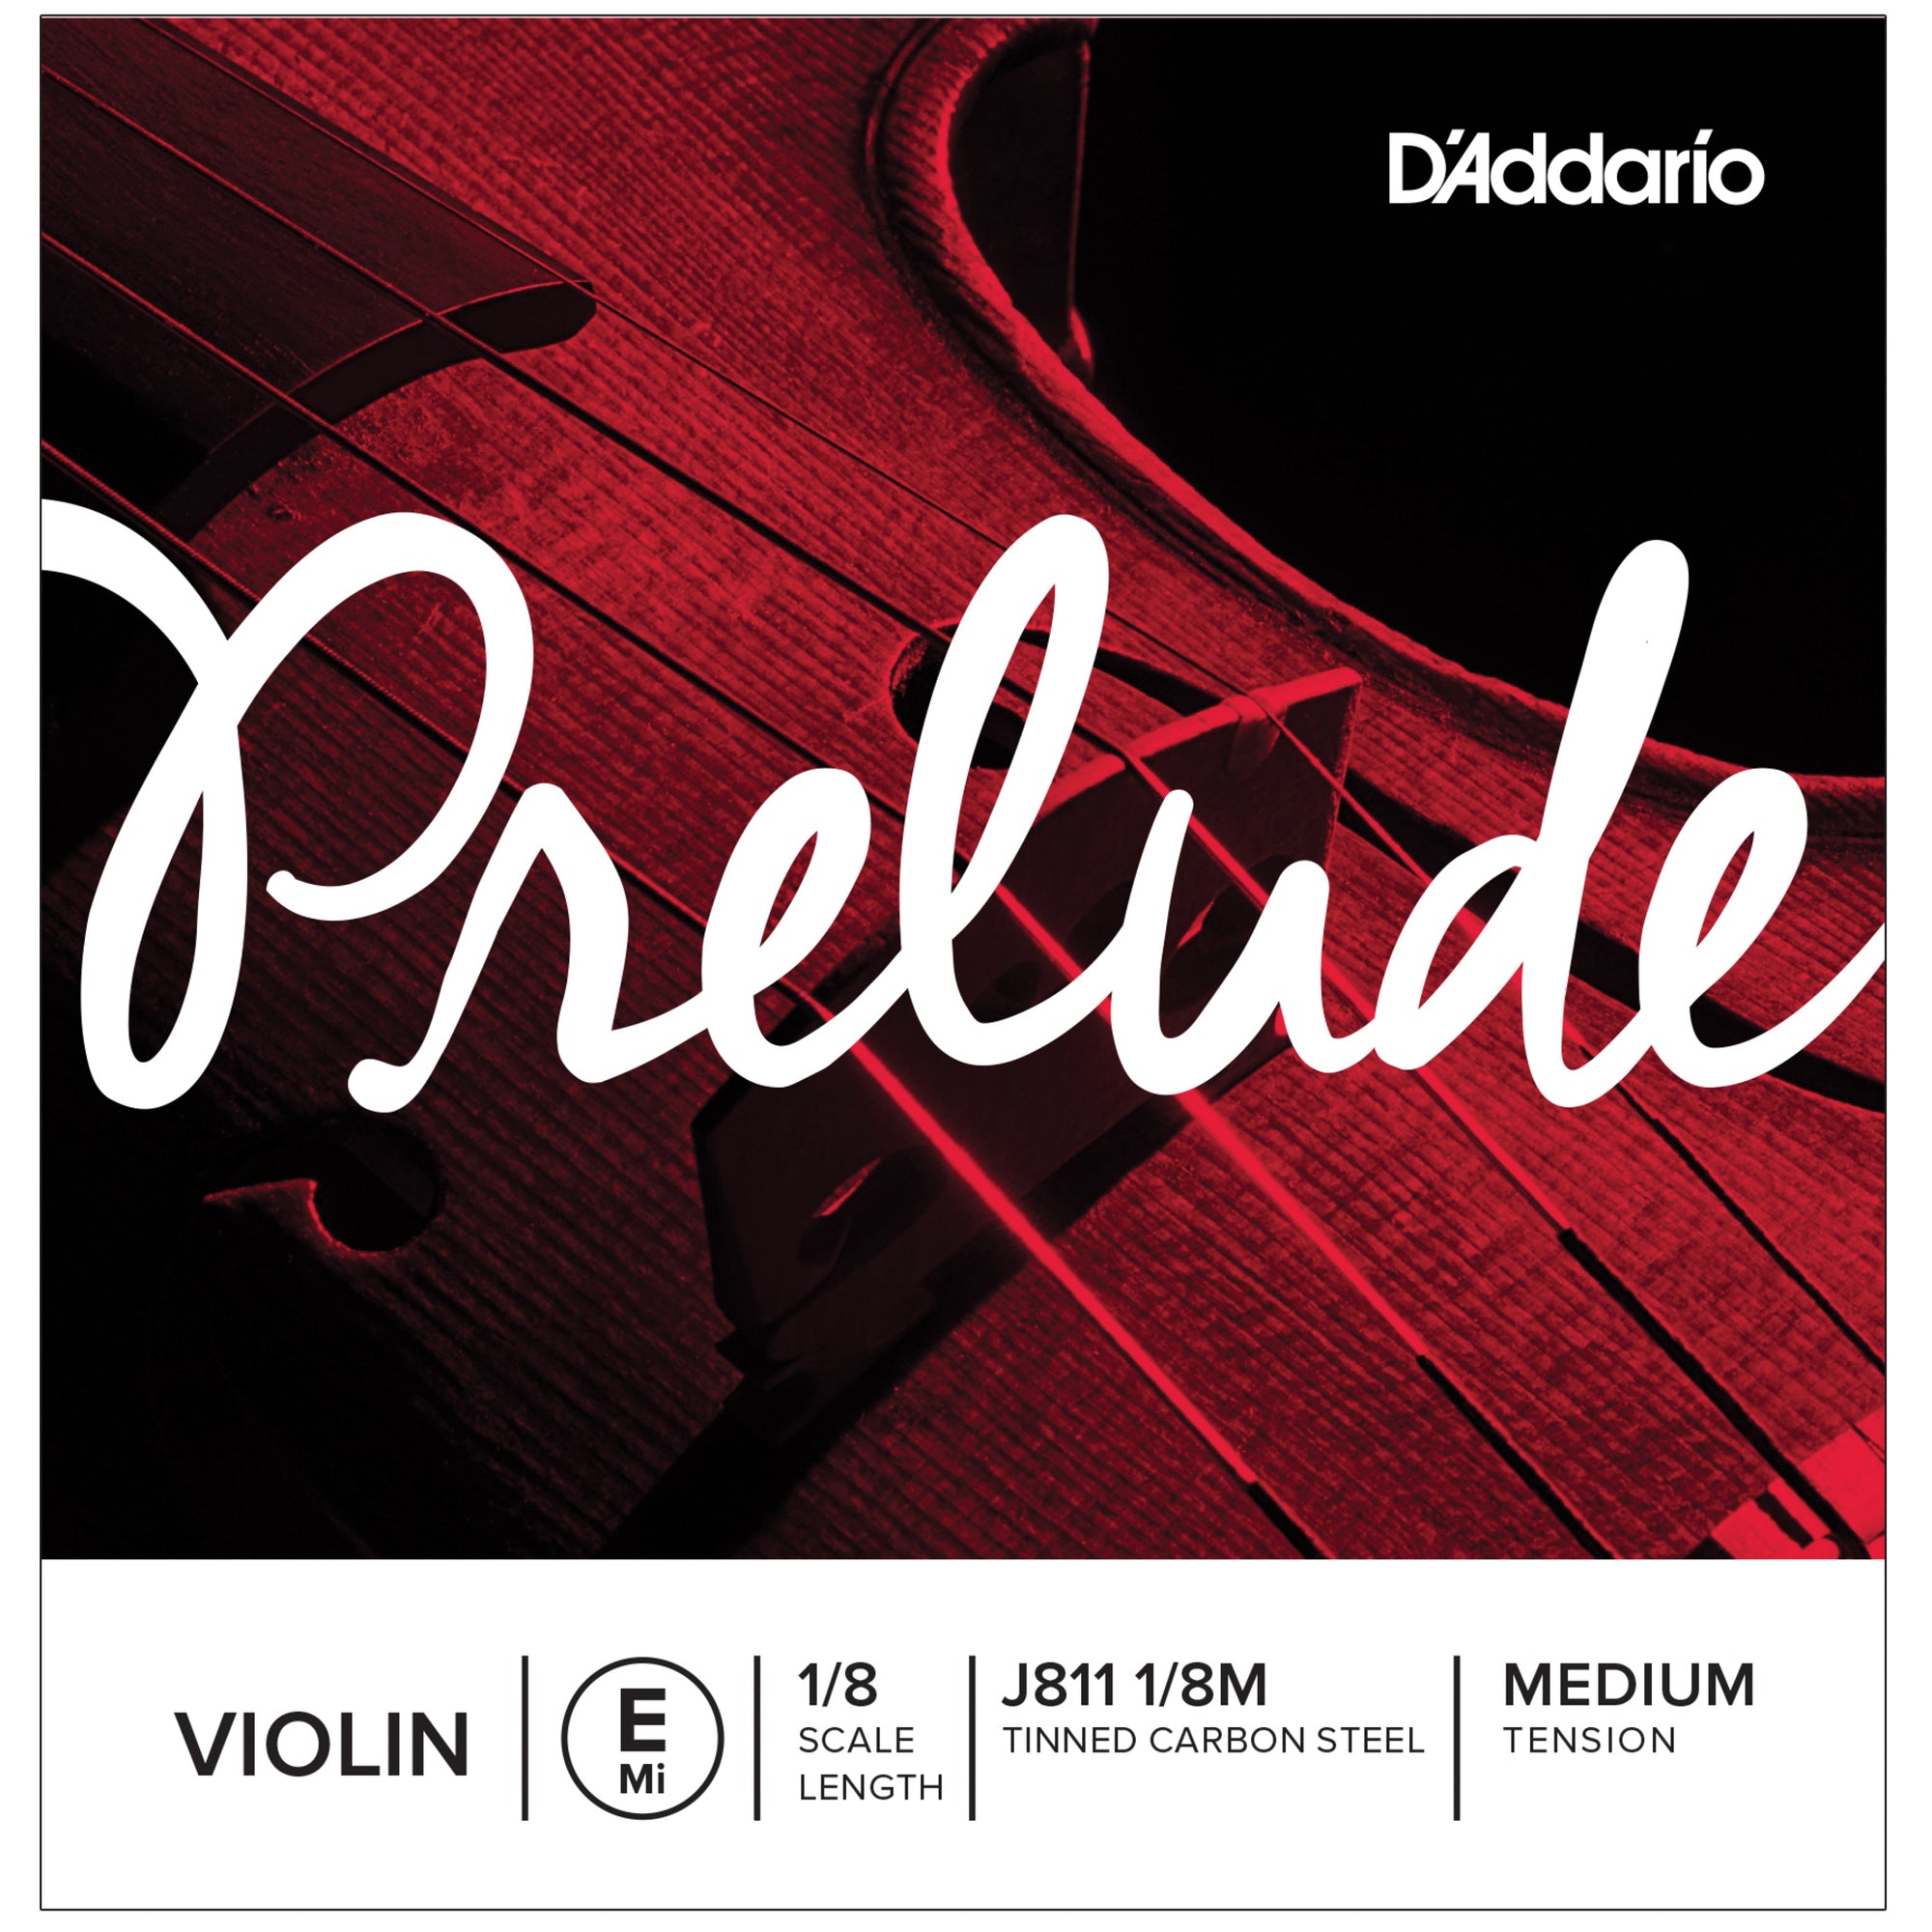 D'Addario J811 1/8M Prelude 1/8 E Violin Single String Medium J811